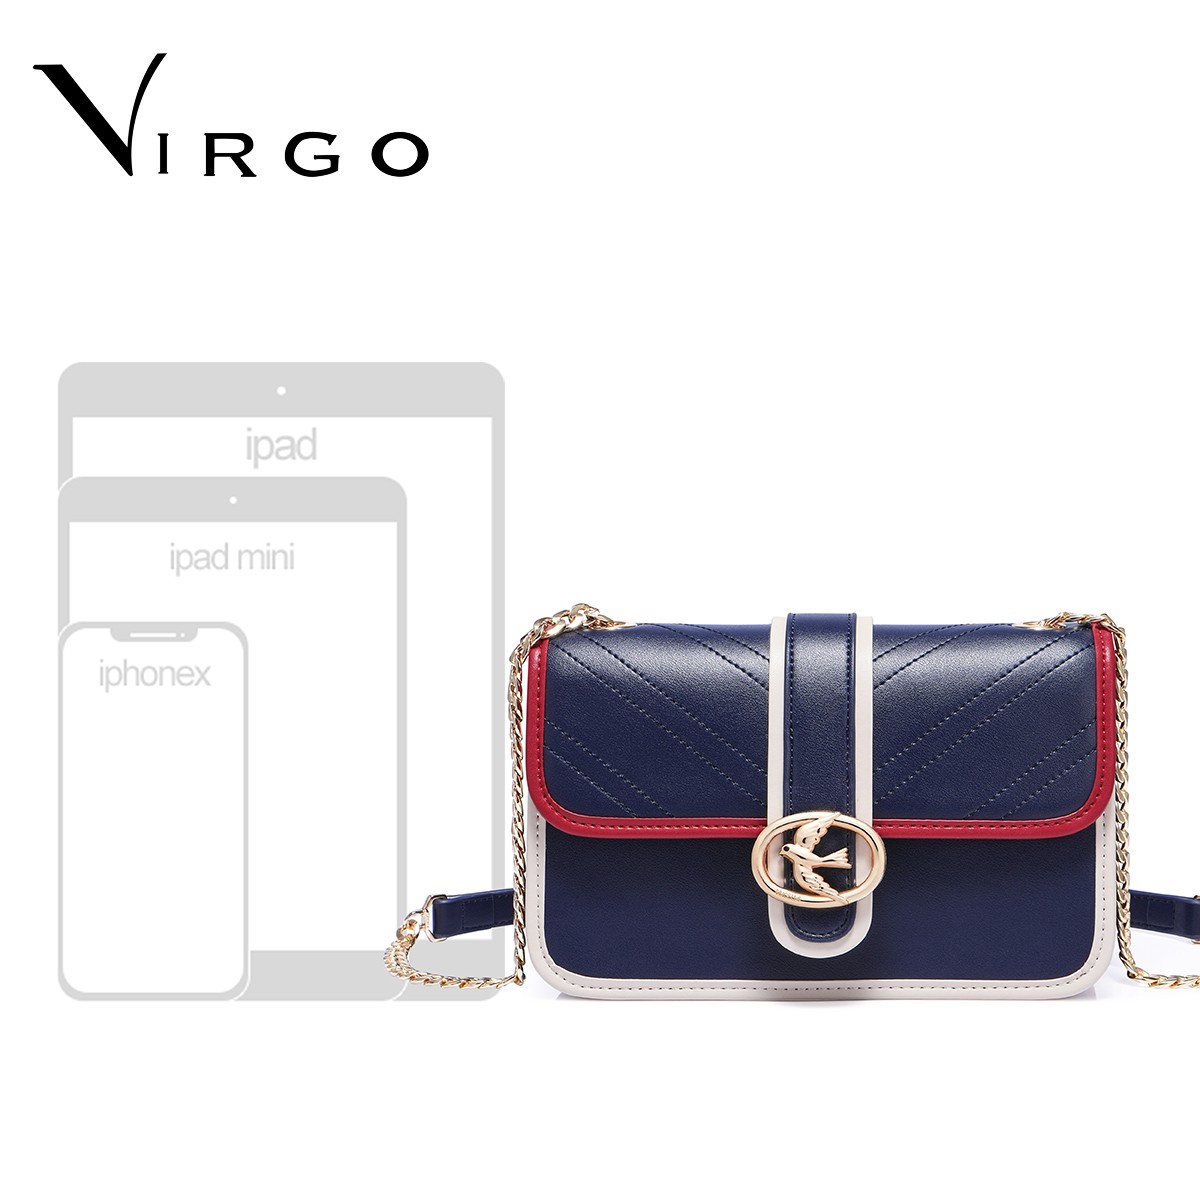 Túi đeo chéo nữ thời trang Nucelle Virgo VG548